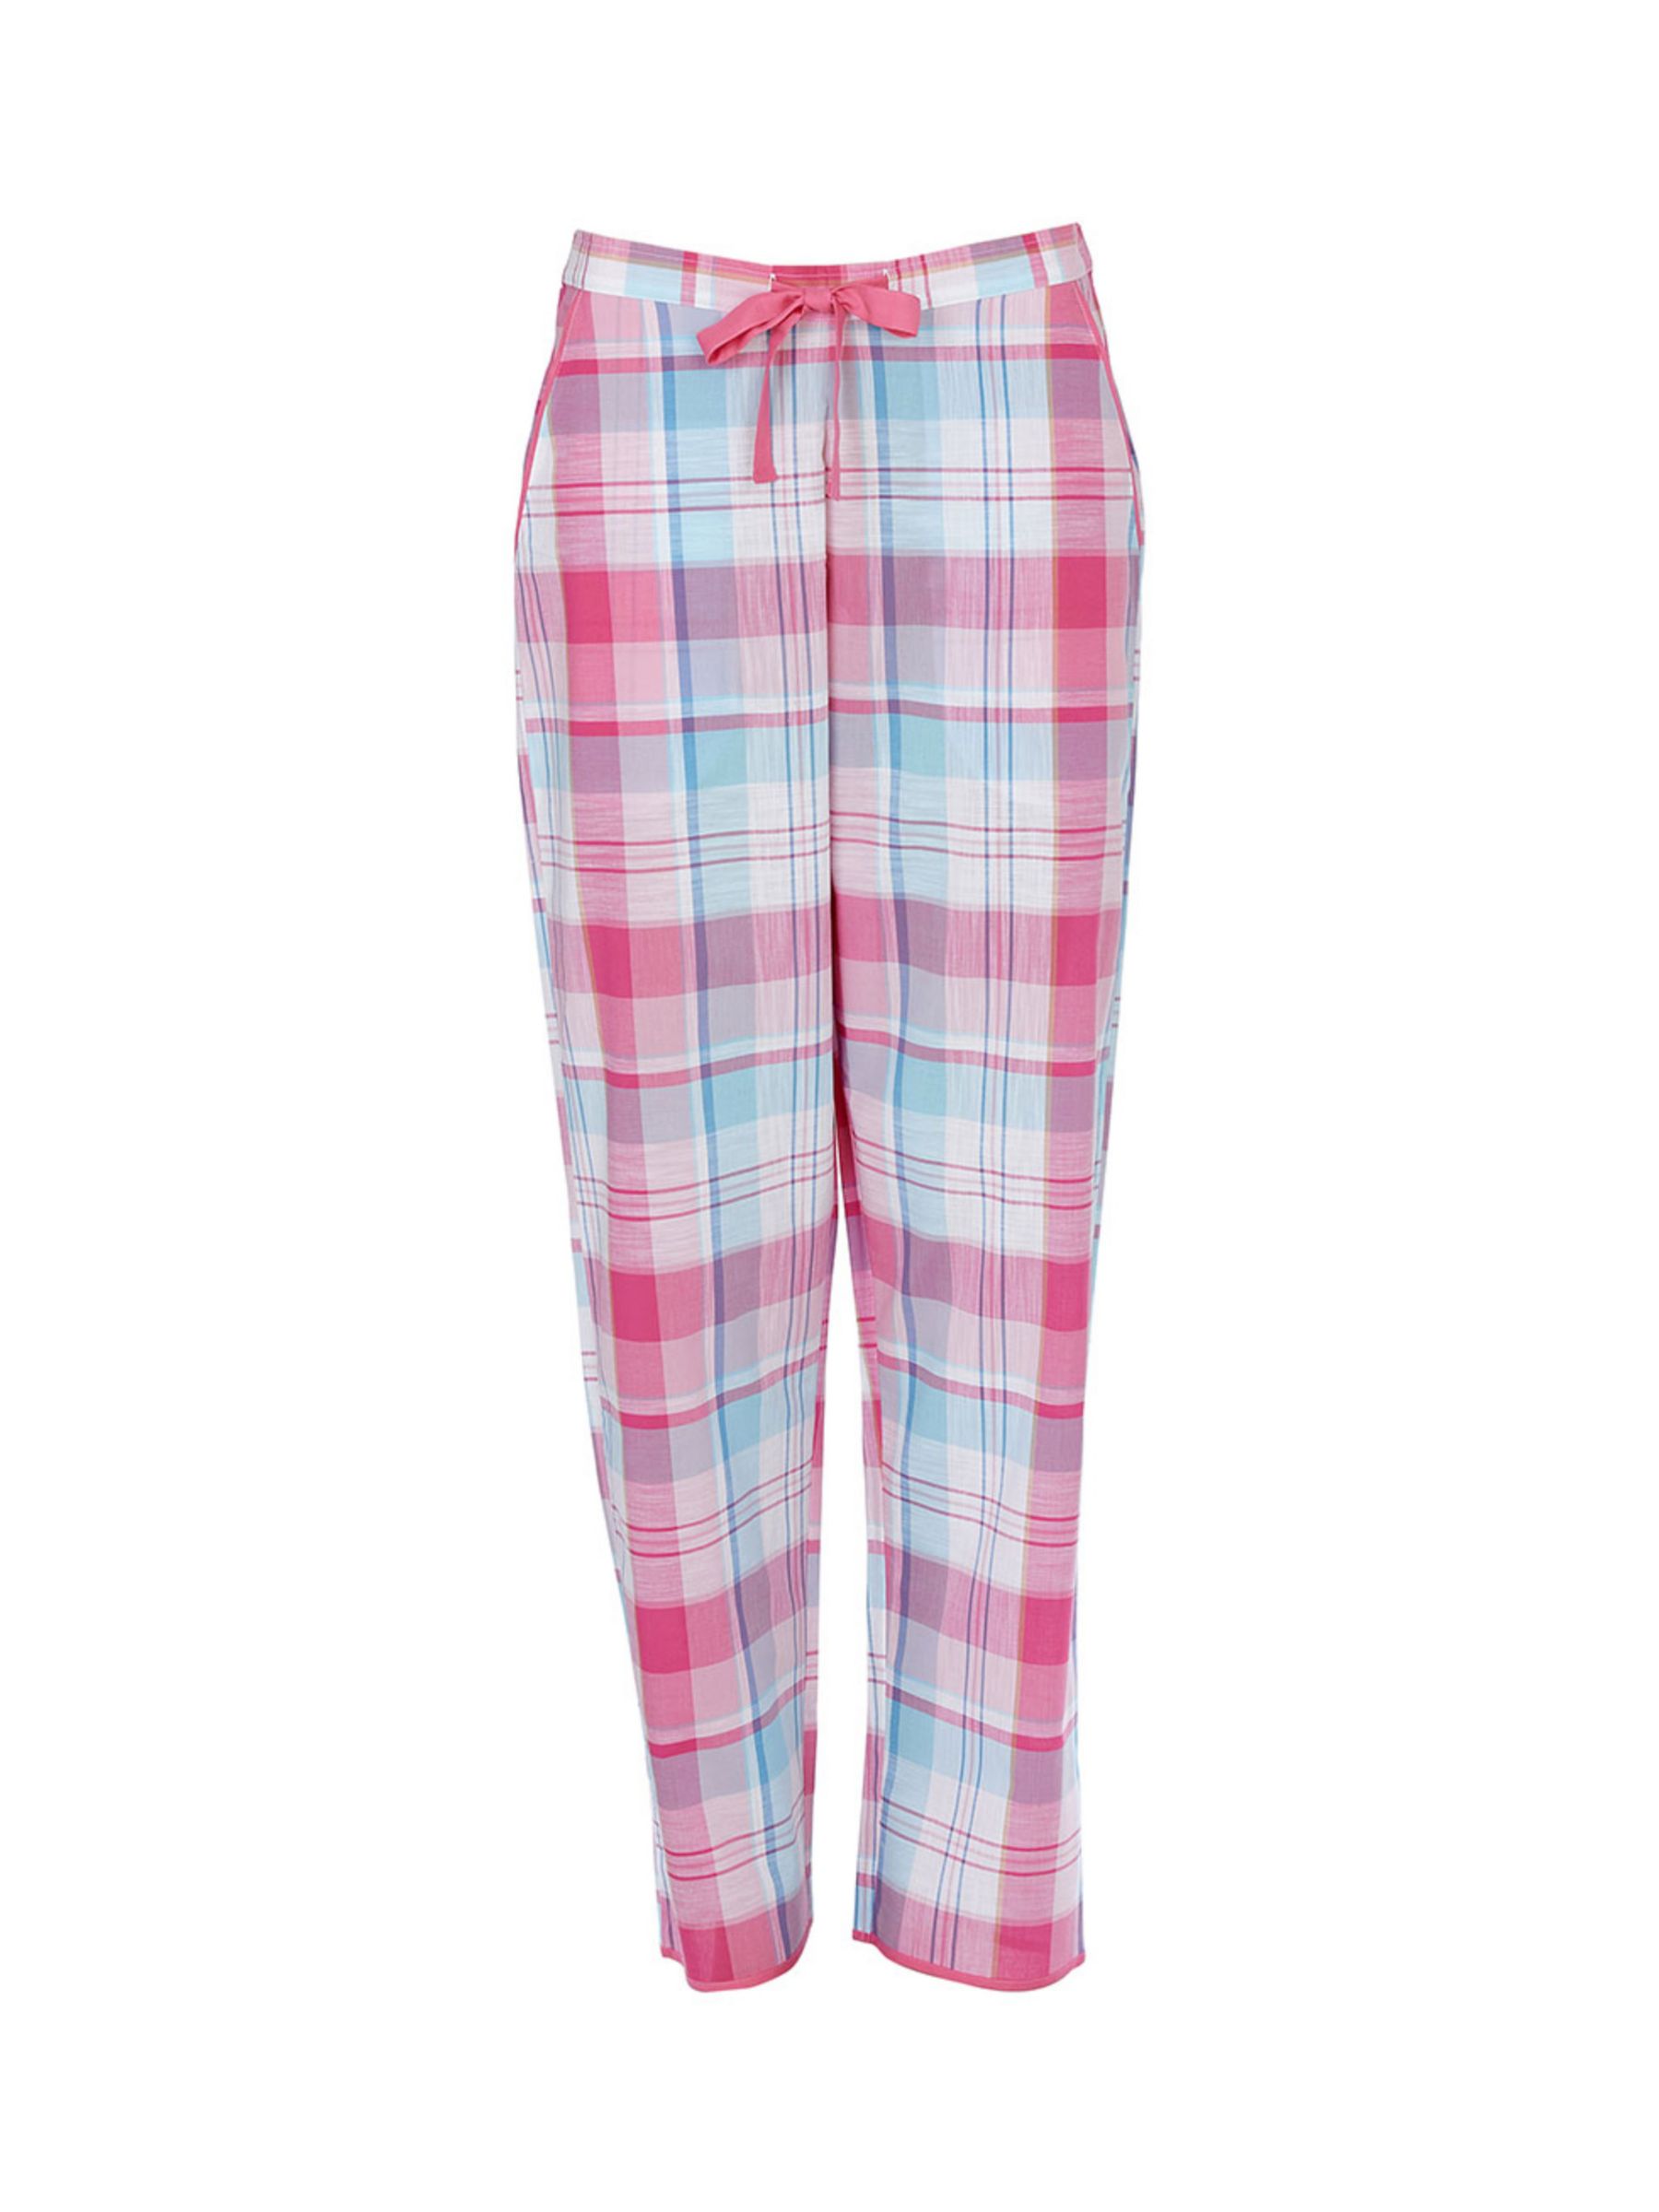 Cyberjammies Shelly Check Pyjama Bottoms, Pink/Multi, 28